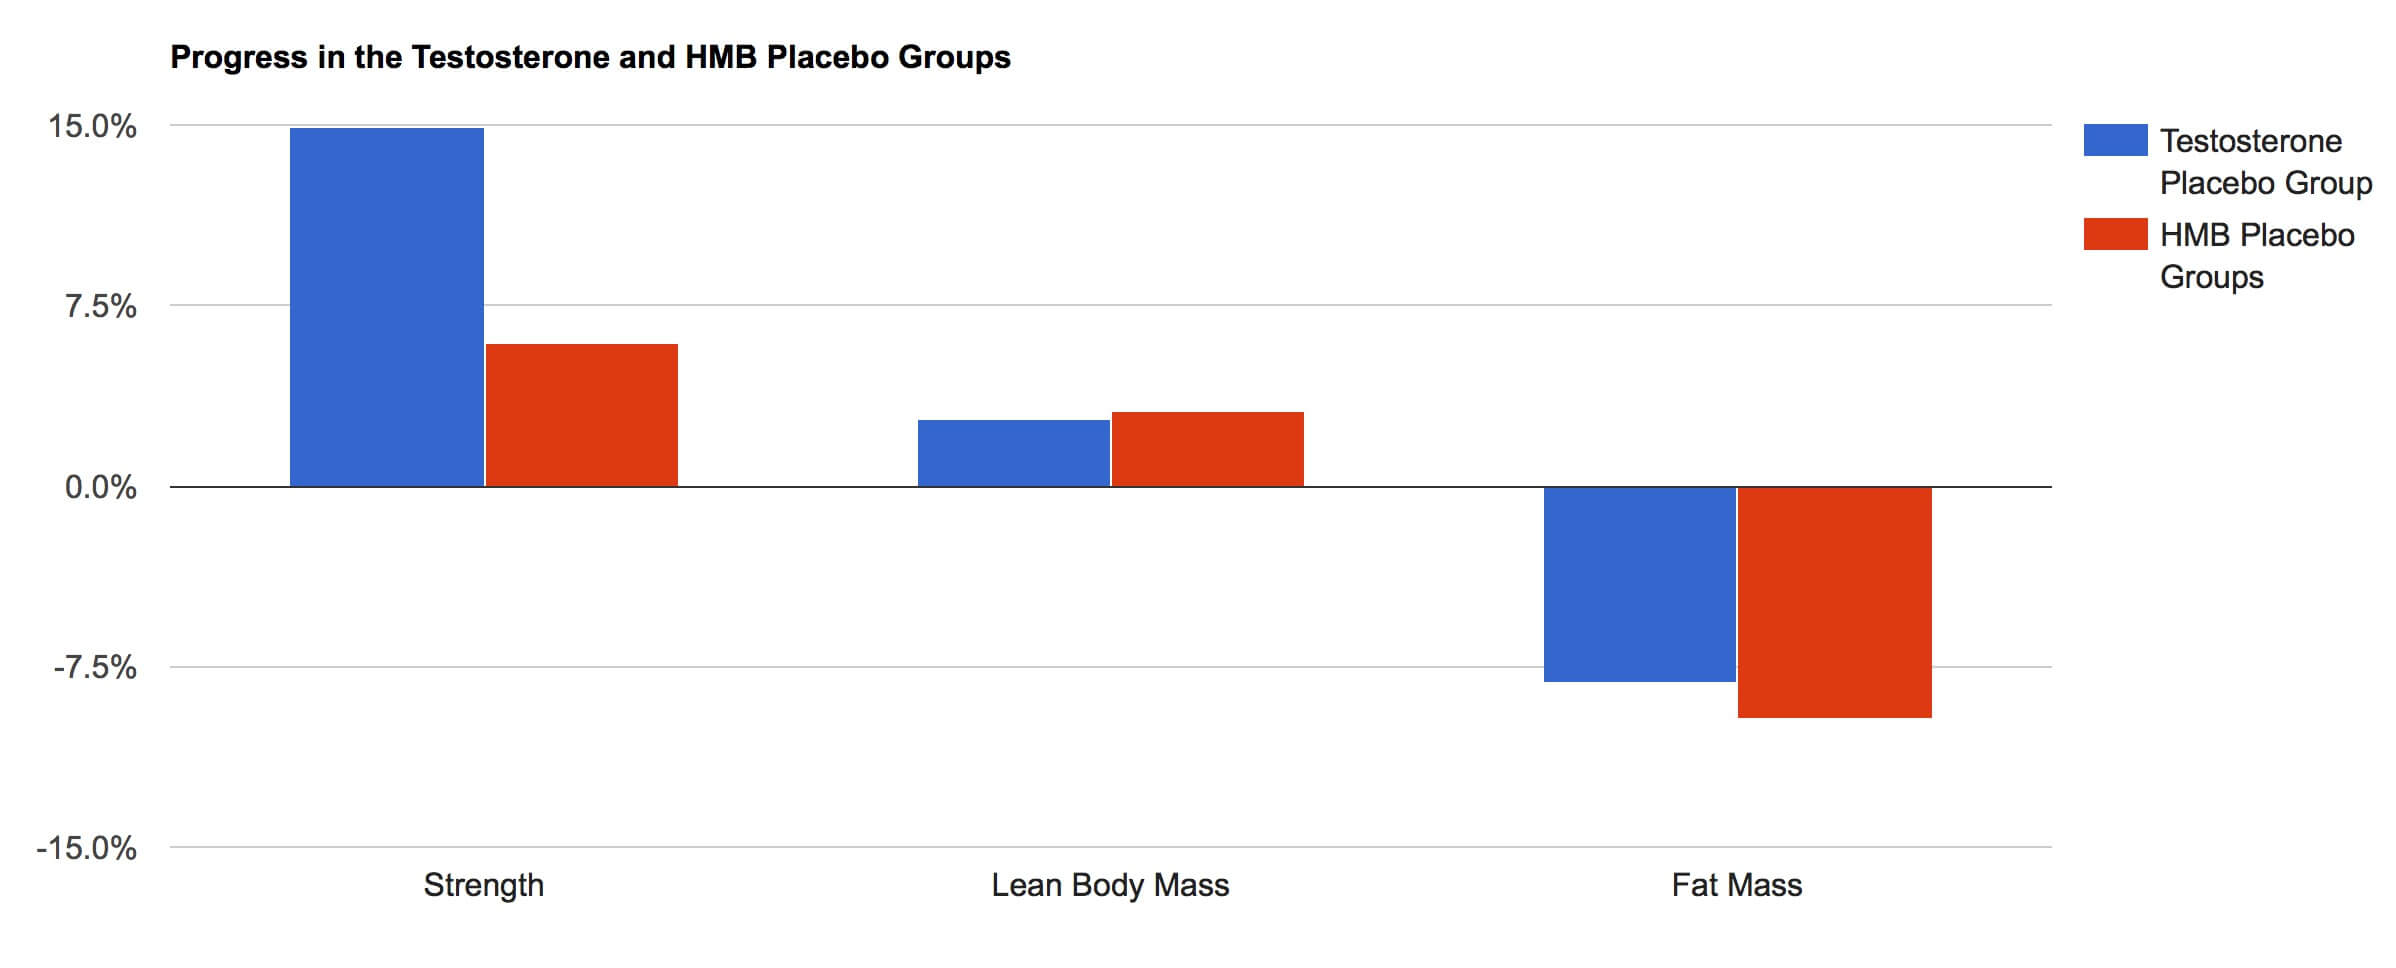 Versus Testosterone Placebo Groups